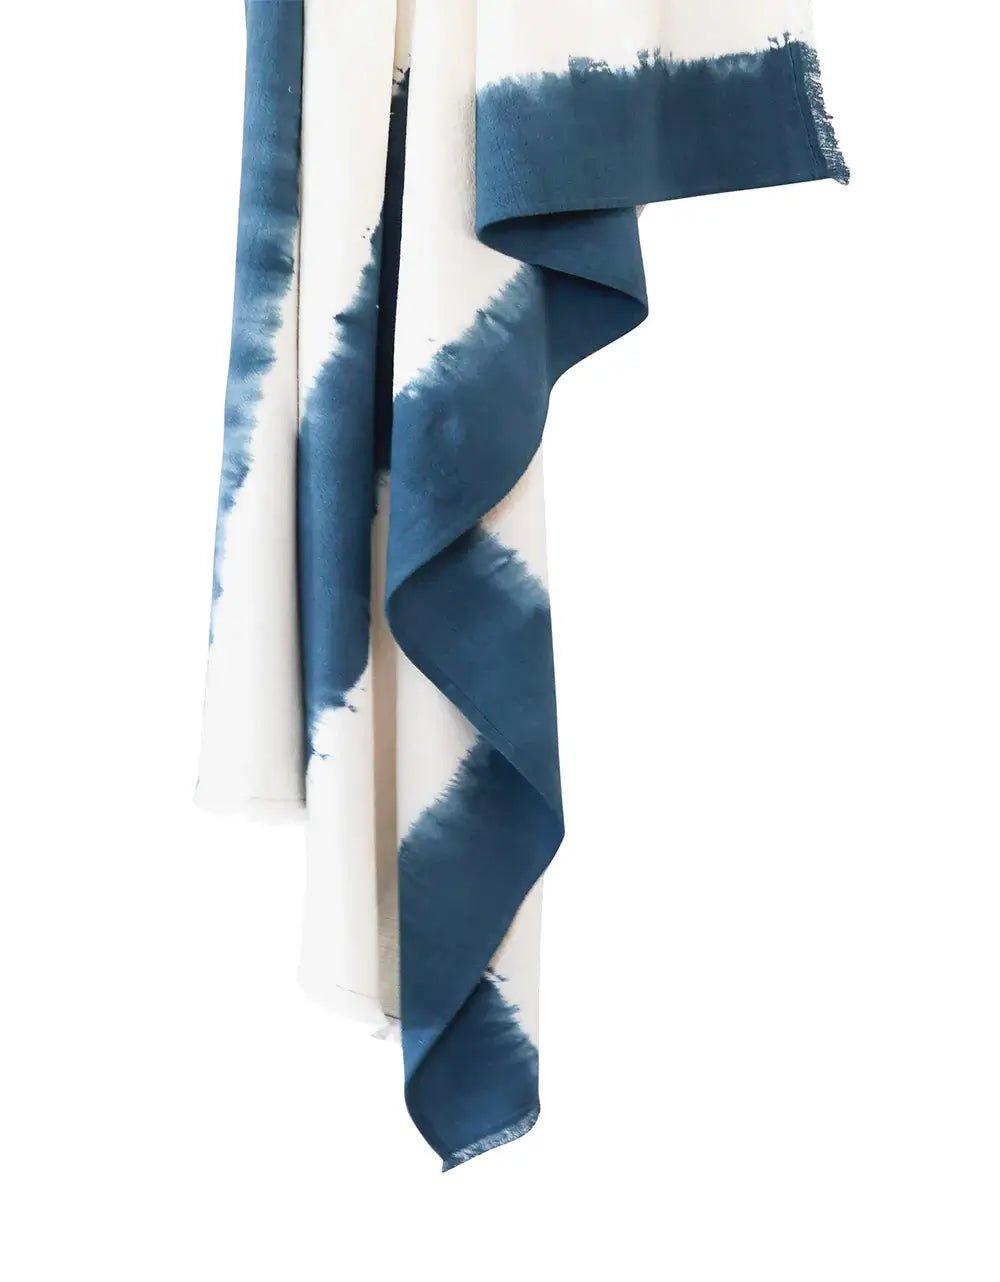 Indigo Blue Tie Dye Cotton Throw - Nature Home Decor